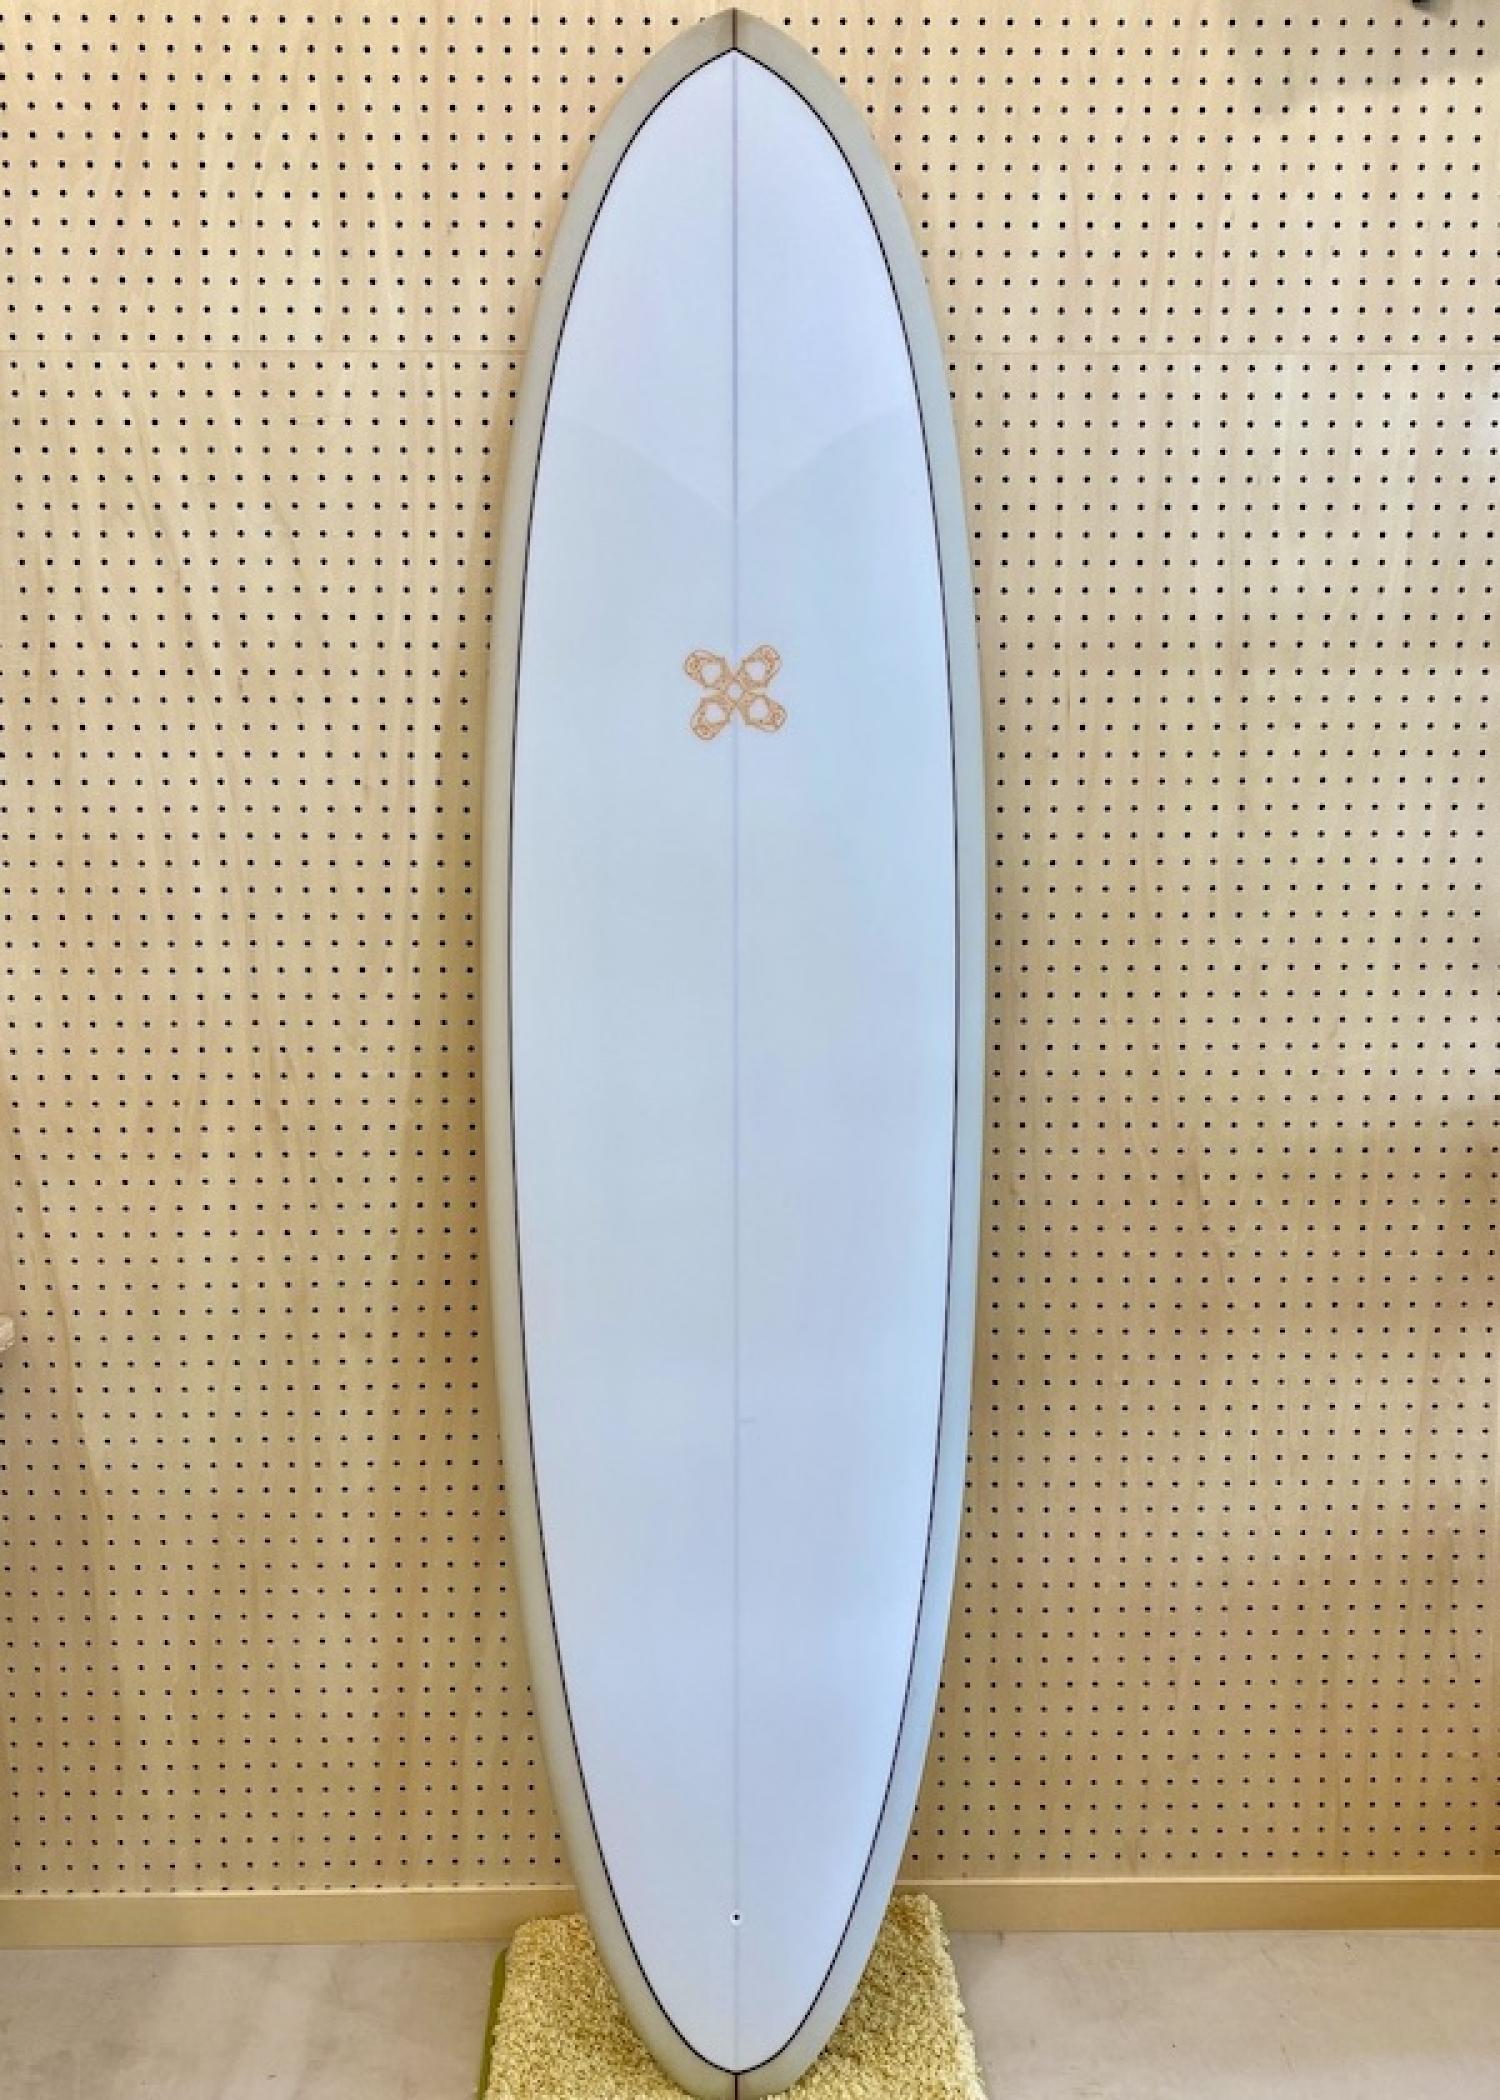 SIC SUP TAO SURF 9.2 TOUGH TECH|Okinawa surf shop YES SURF